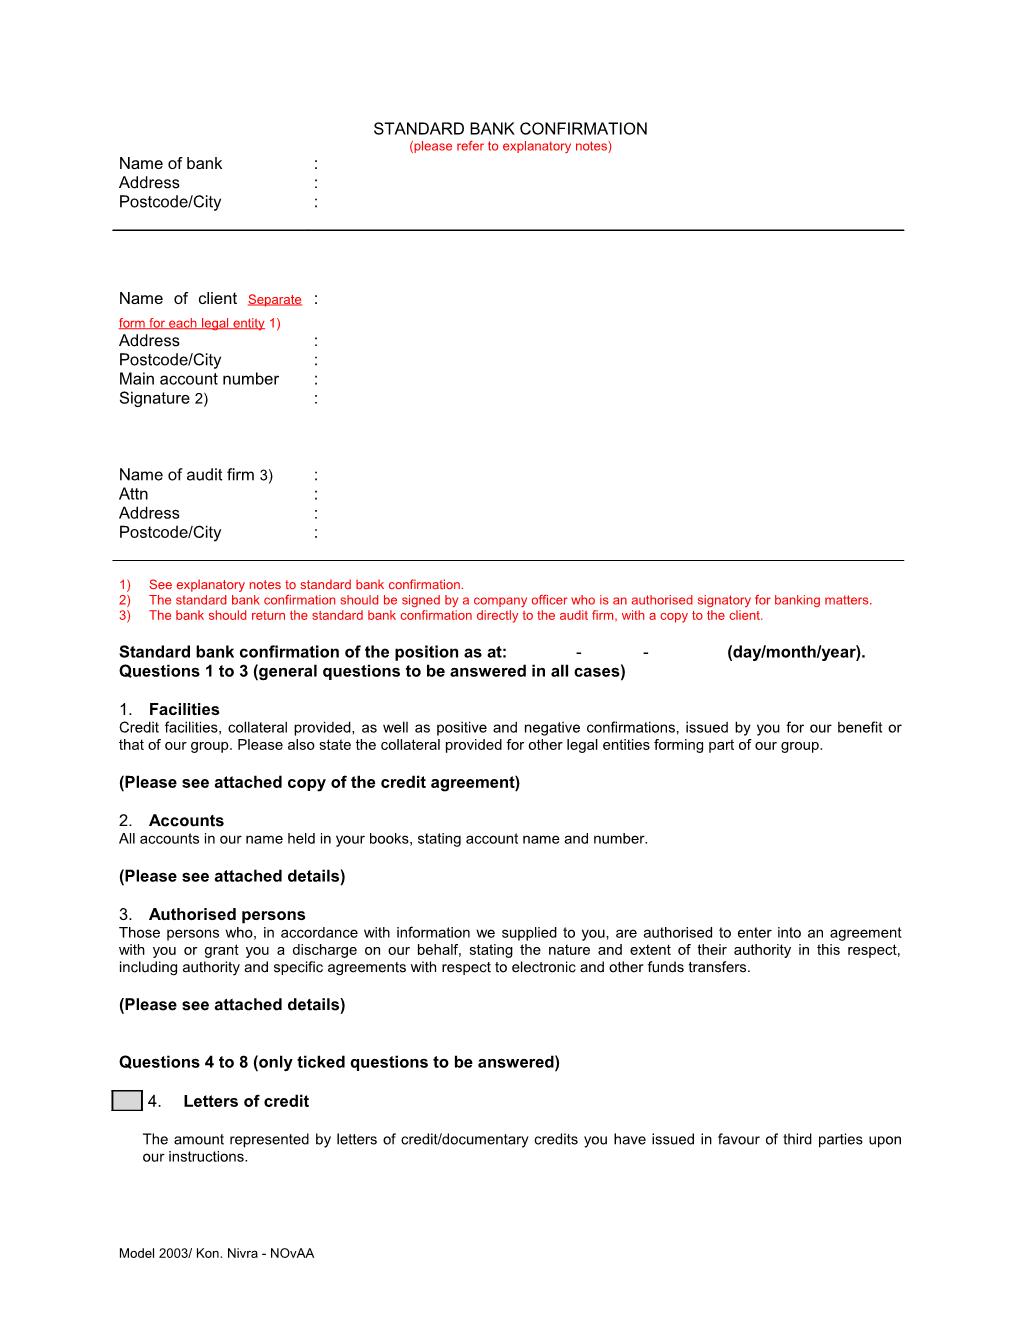 Standard Bank Confirmation Form